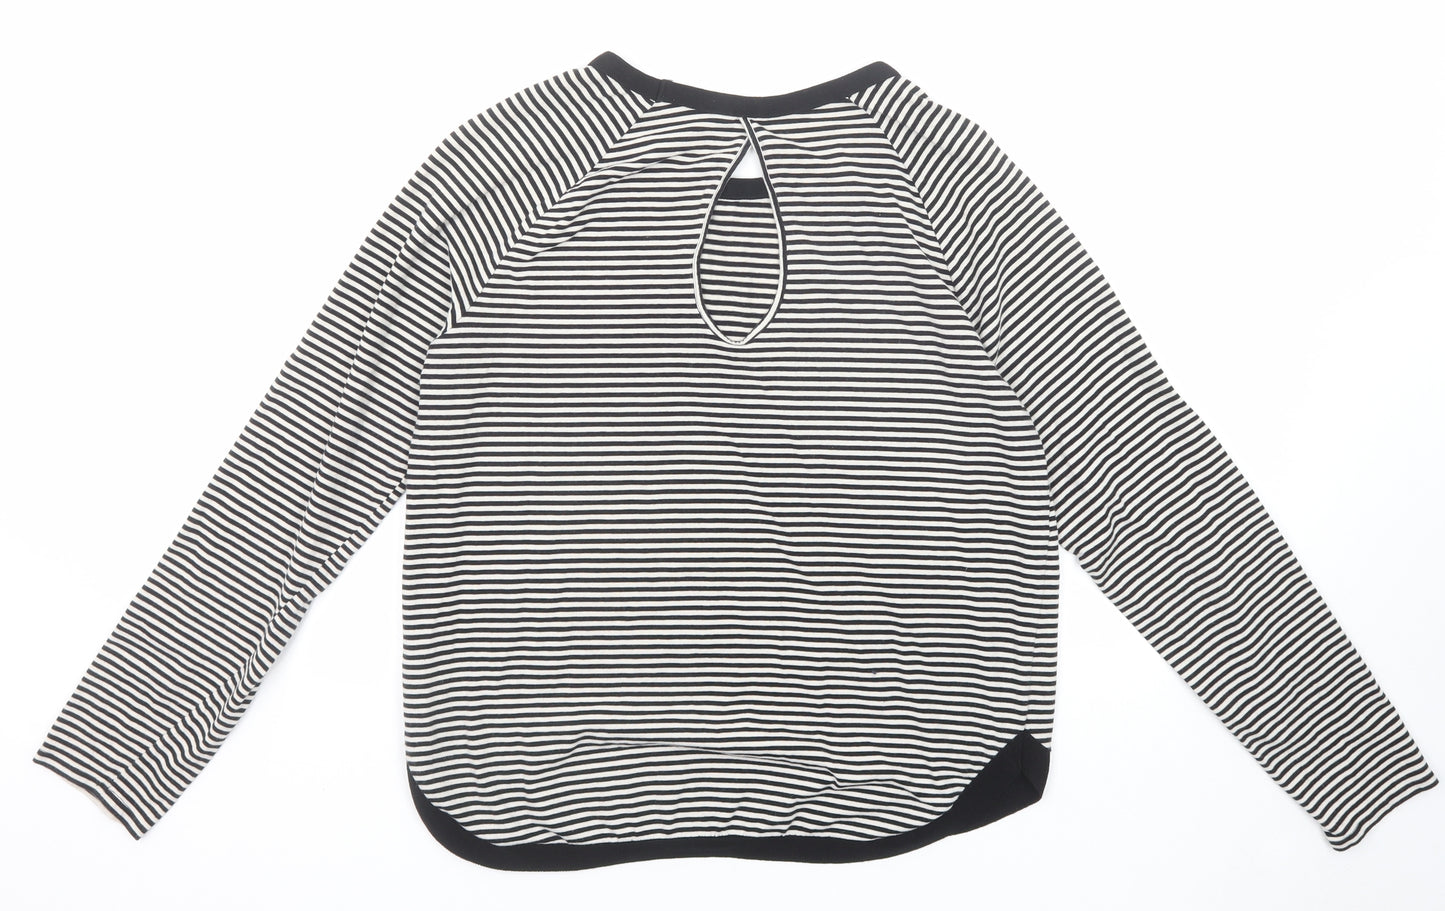 NEXT Womens Black Striped Cotton Basic T-Shirt Size 14 Boat Neck